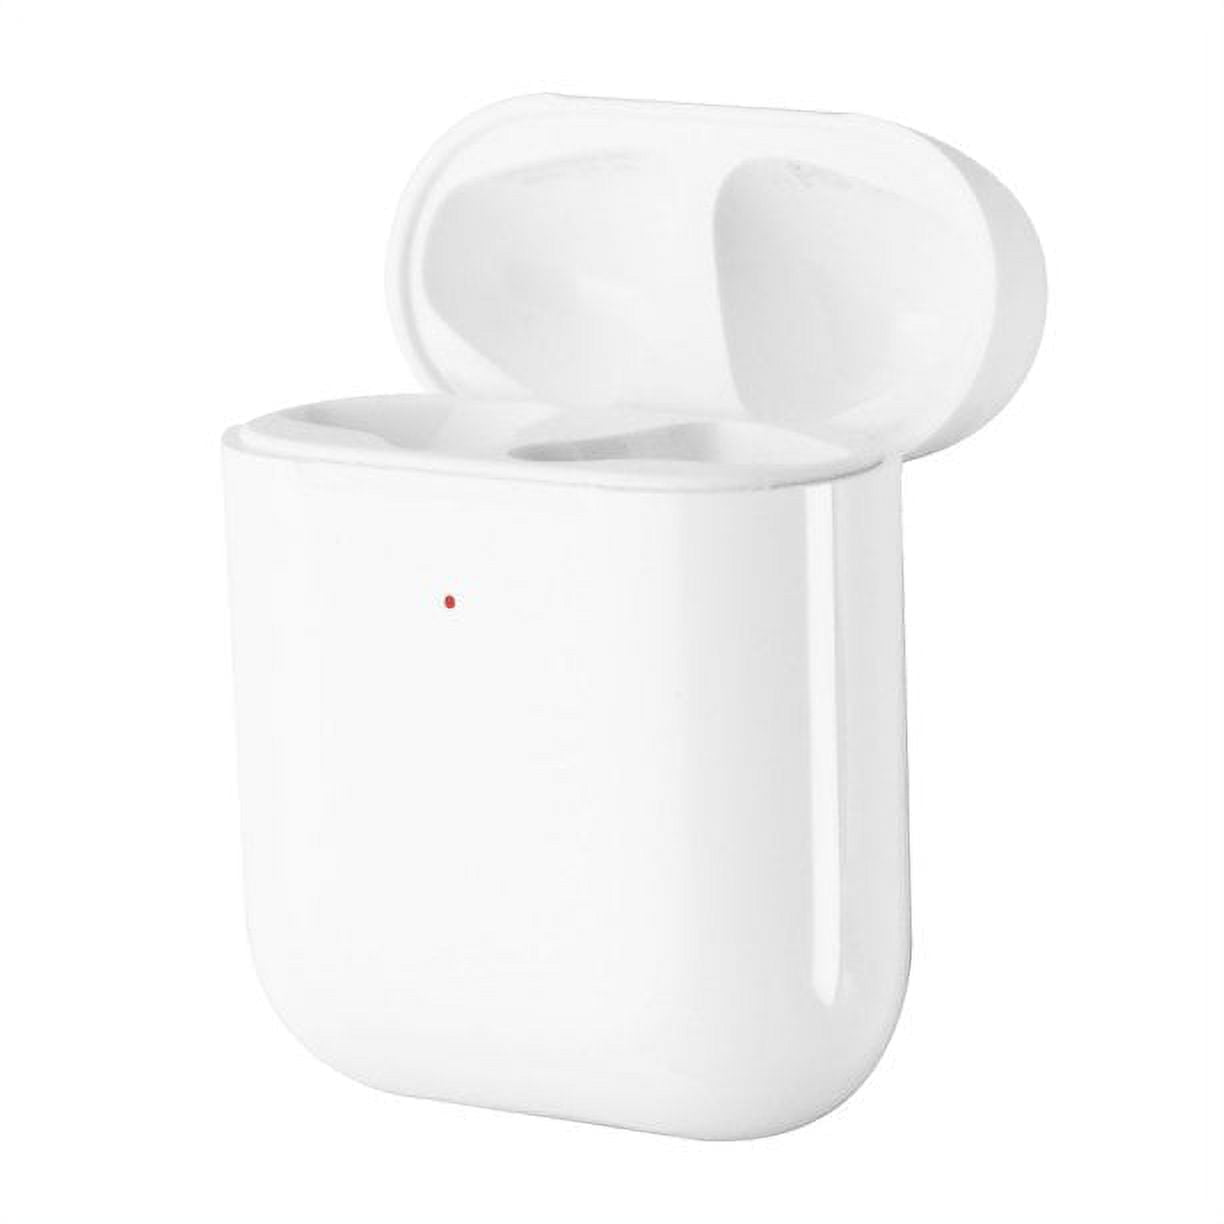 APPLE Apple AirPods 1 white - Reacondicionado Grado A+ - Private